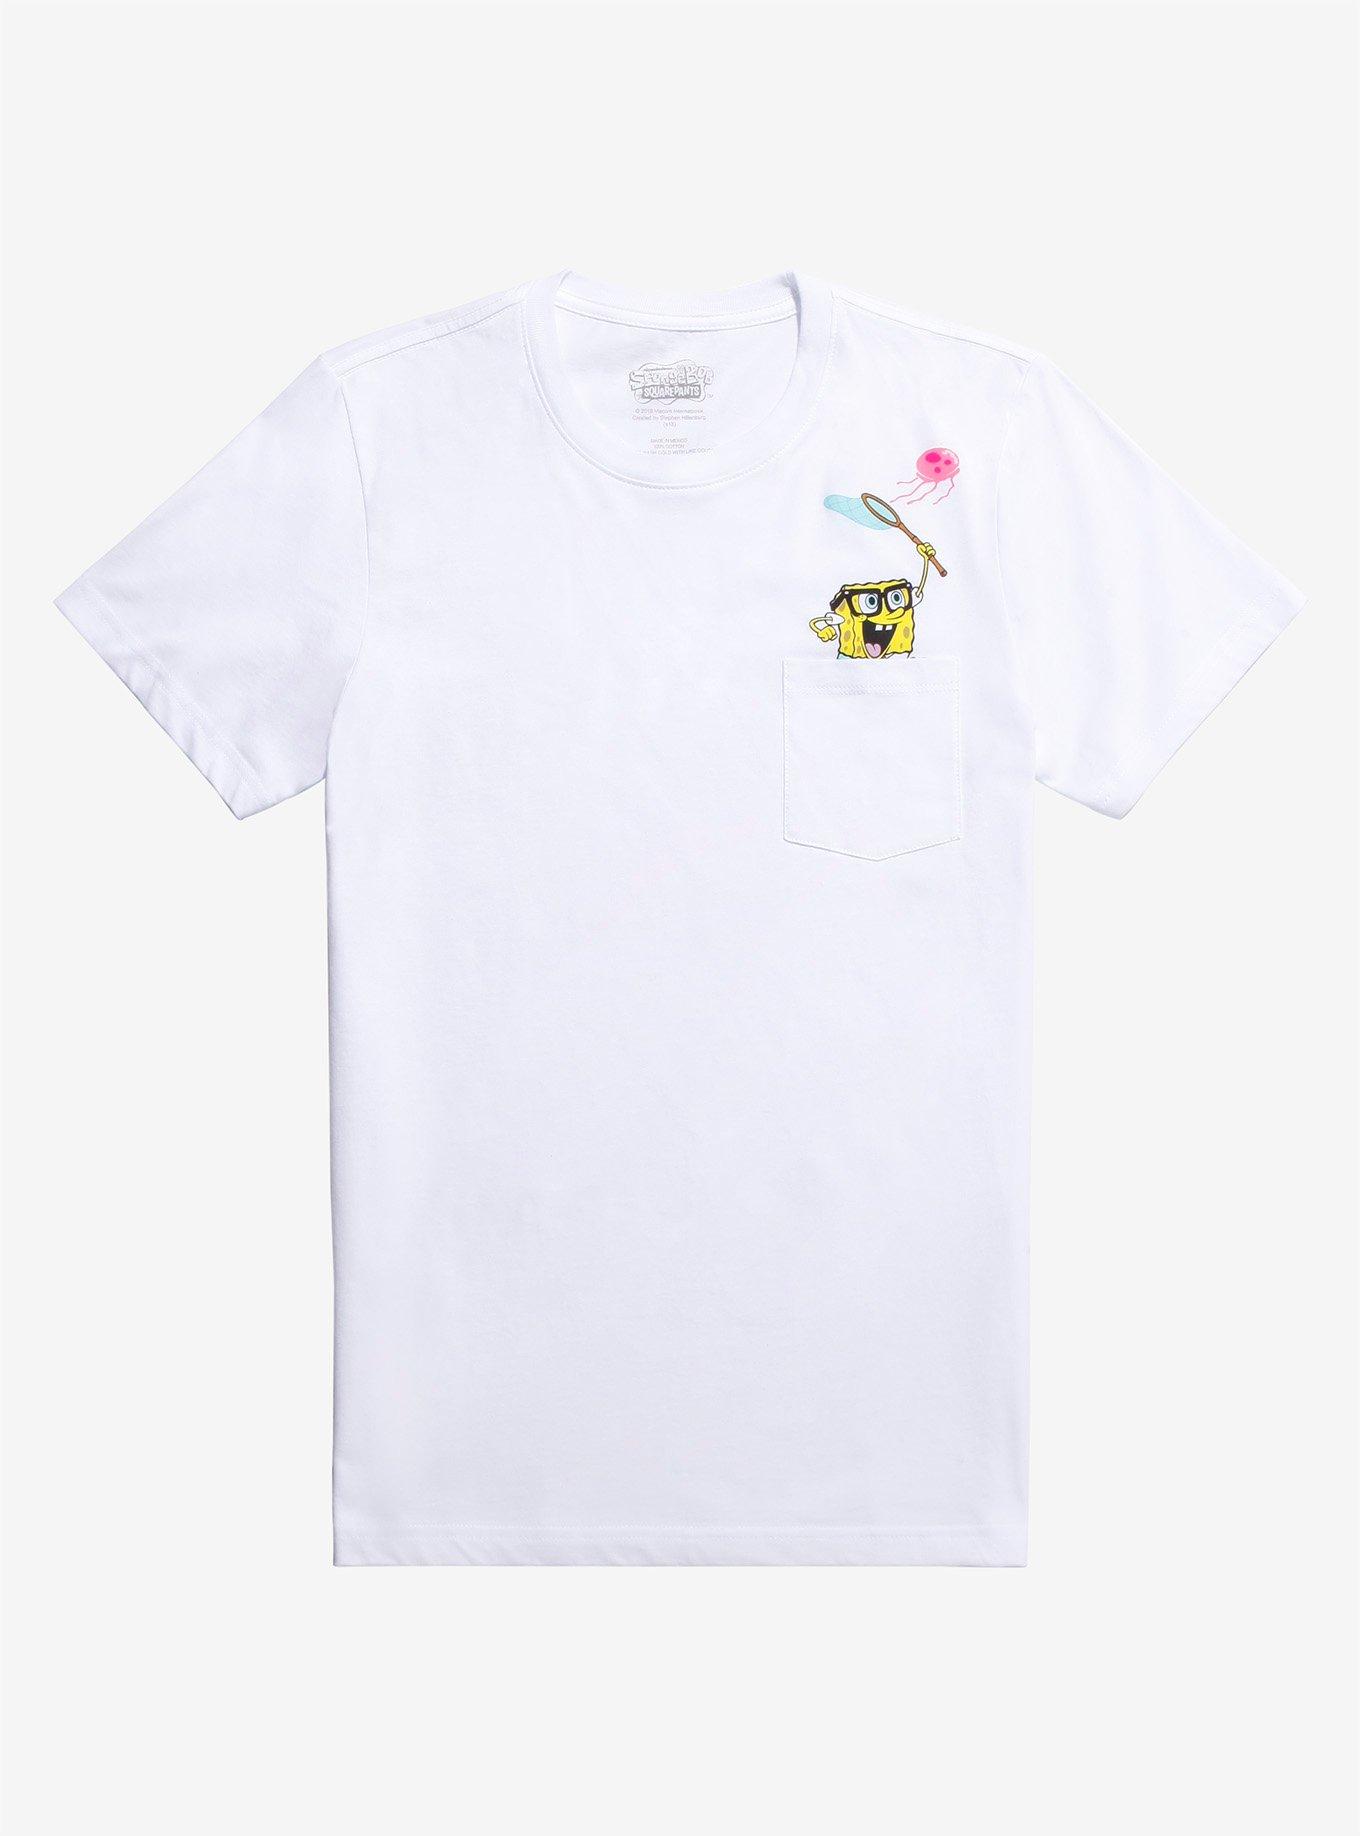 SpongeBob SquarePants Jellyfishing Pocket T-Shirt | Hot Topic